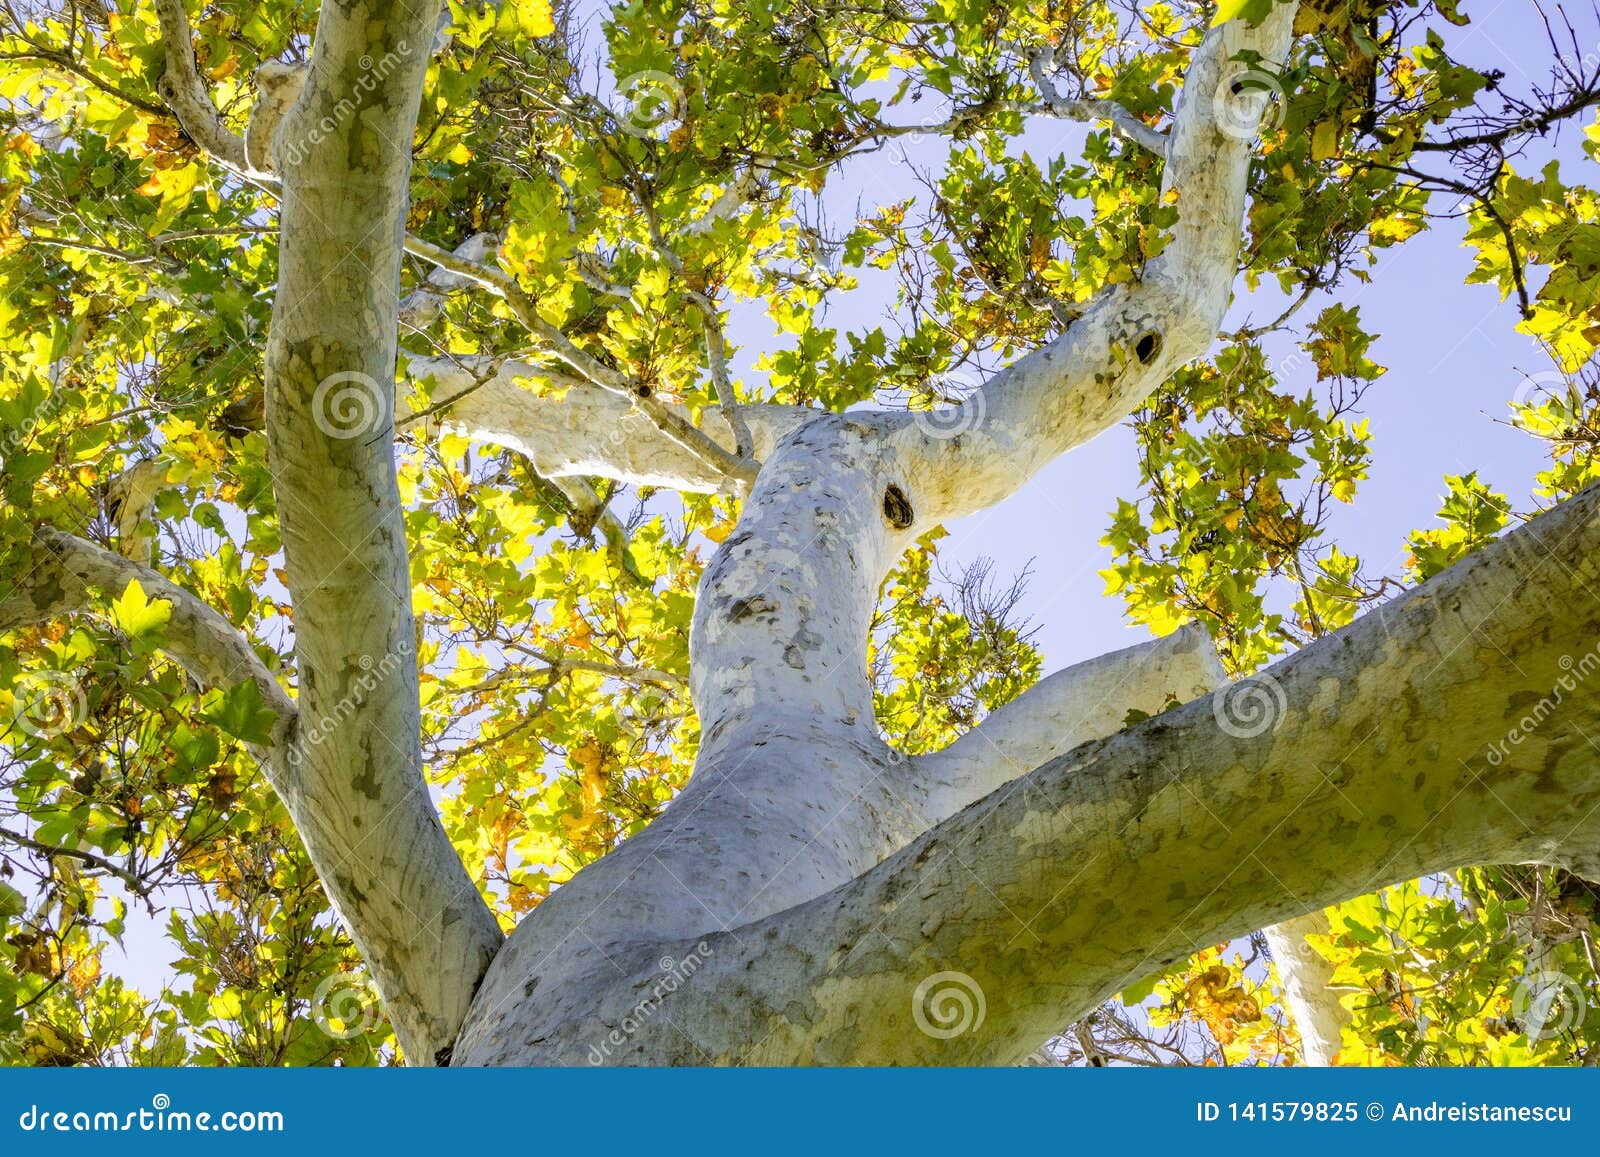 western sycamore tree platanus racemosa seen from below, california